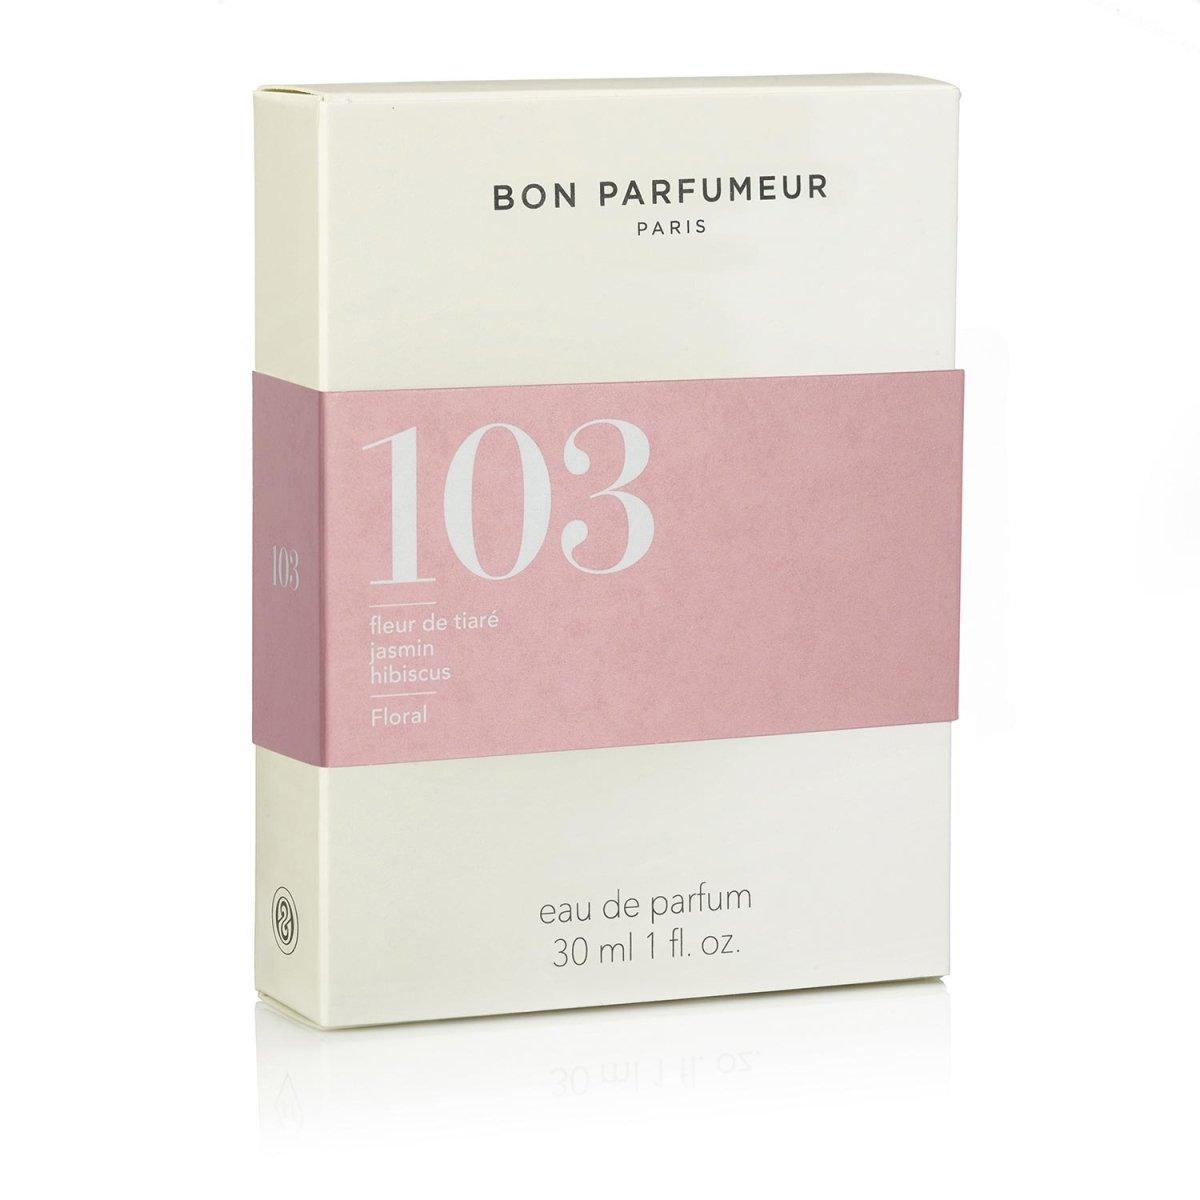 Bon Parfumeur 103 Tiaré, Jasmine, Hibiscus - SUPERCONSCIOUS BERLIN